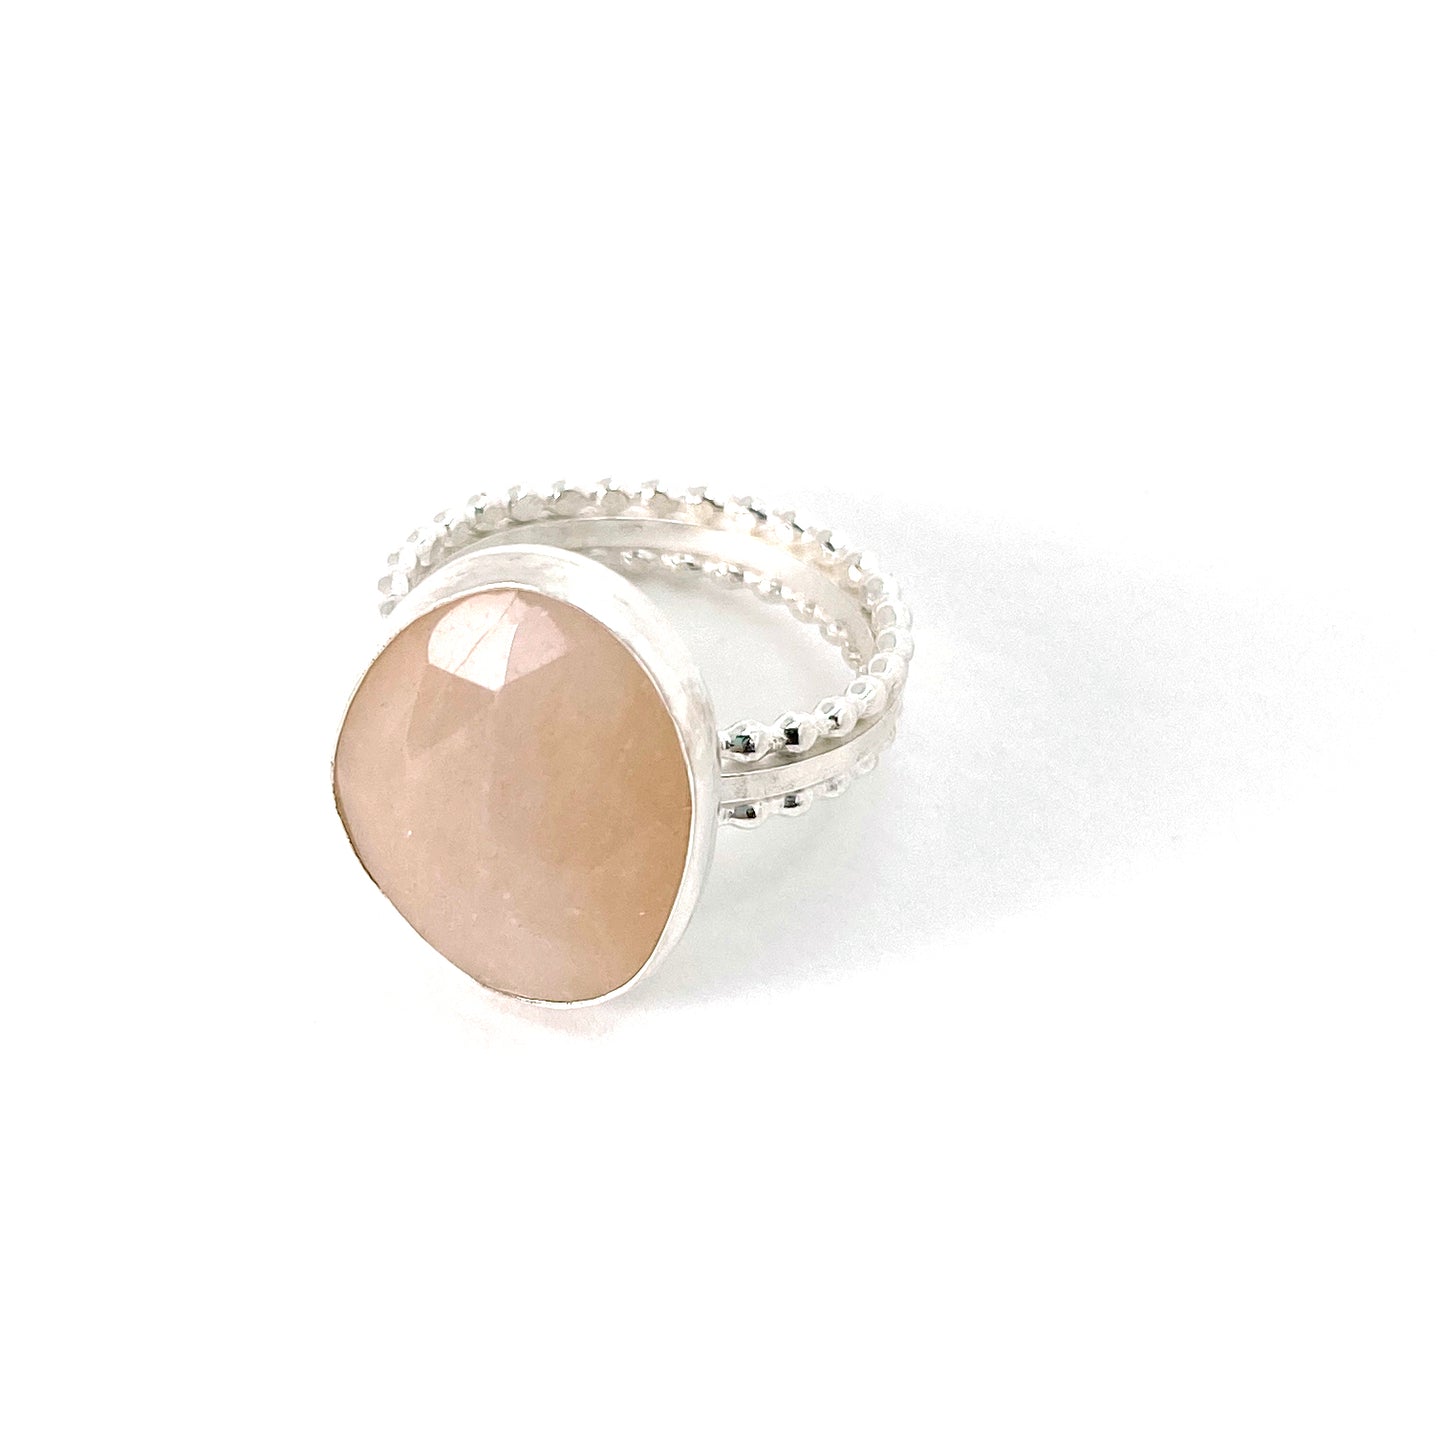 Rosecut Peach Moonstone Ring Size 7